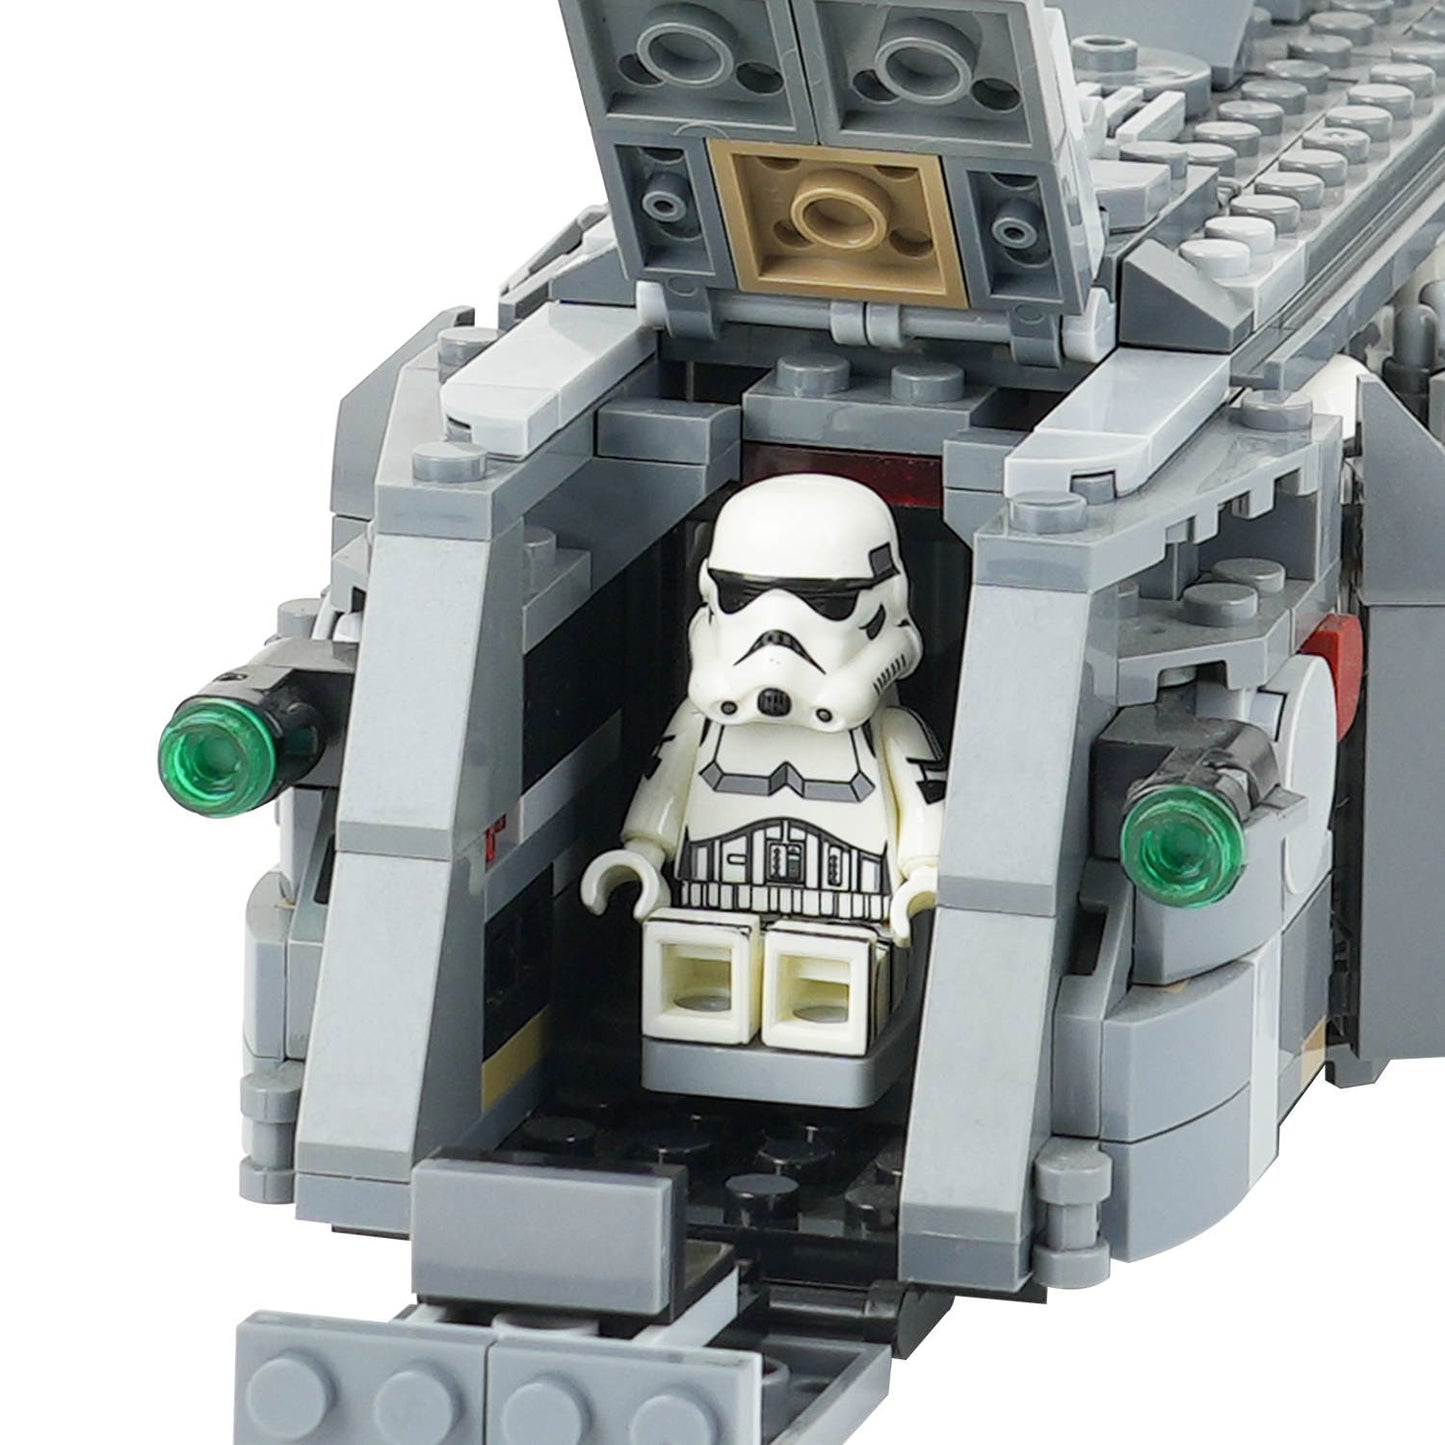 Storm Trooper Transport - 656 pieces Mini Figures